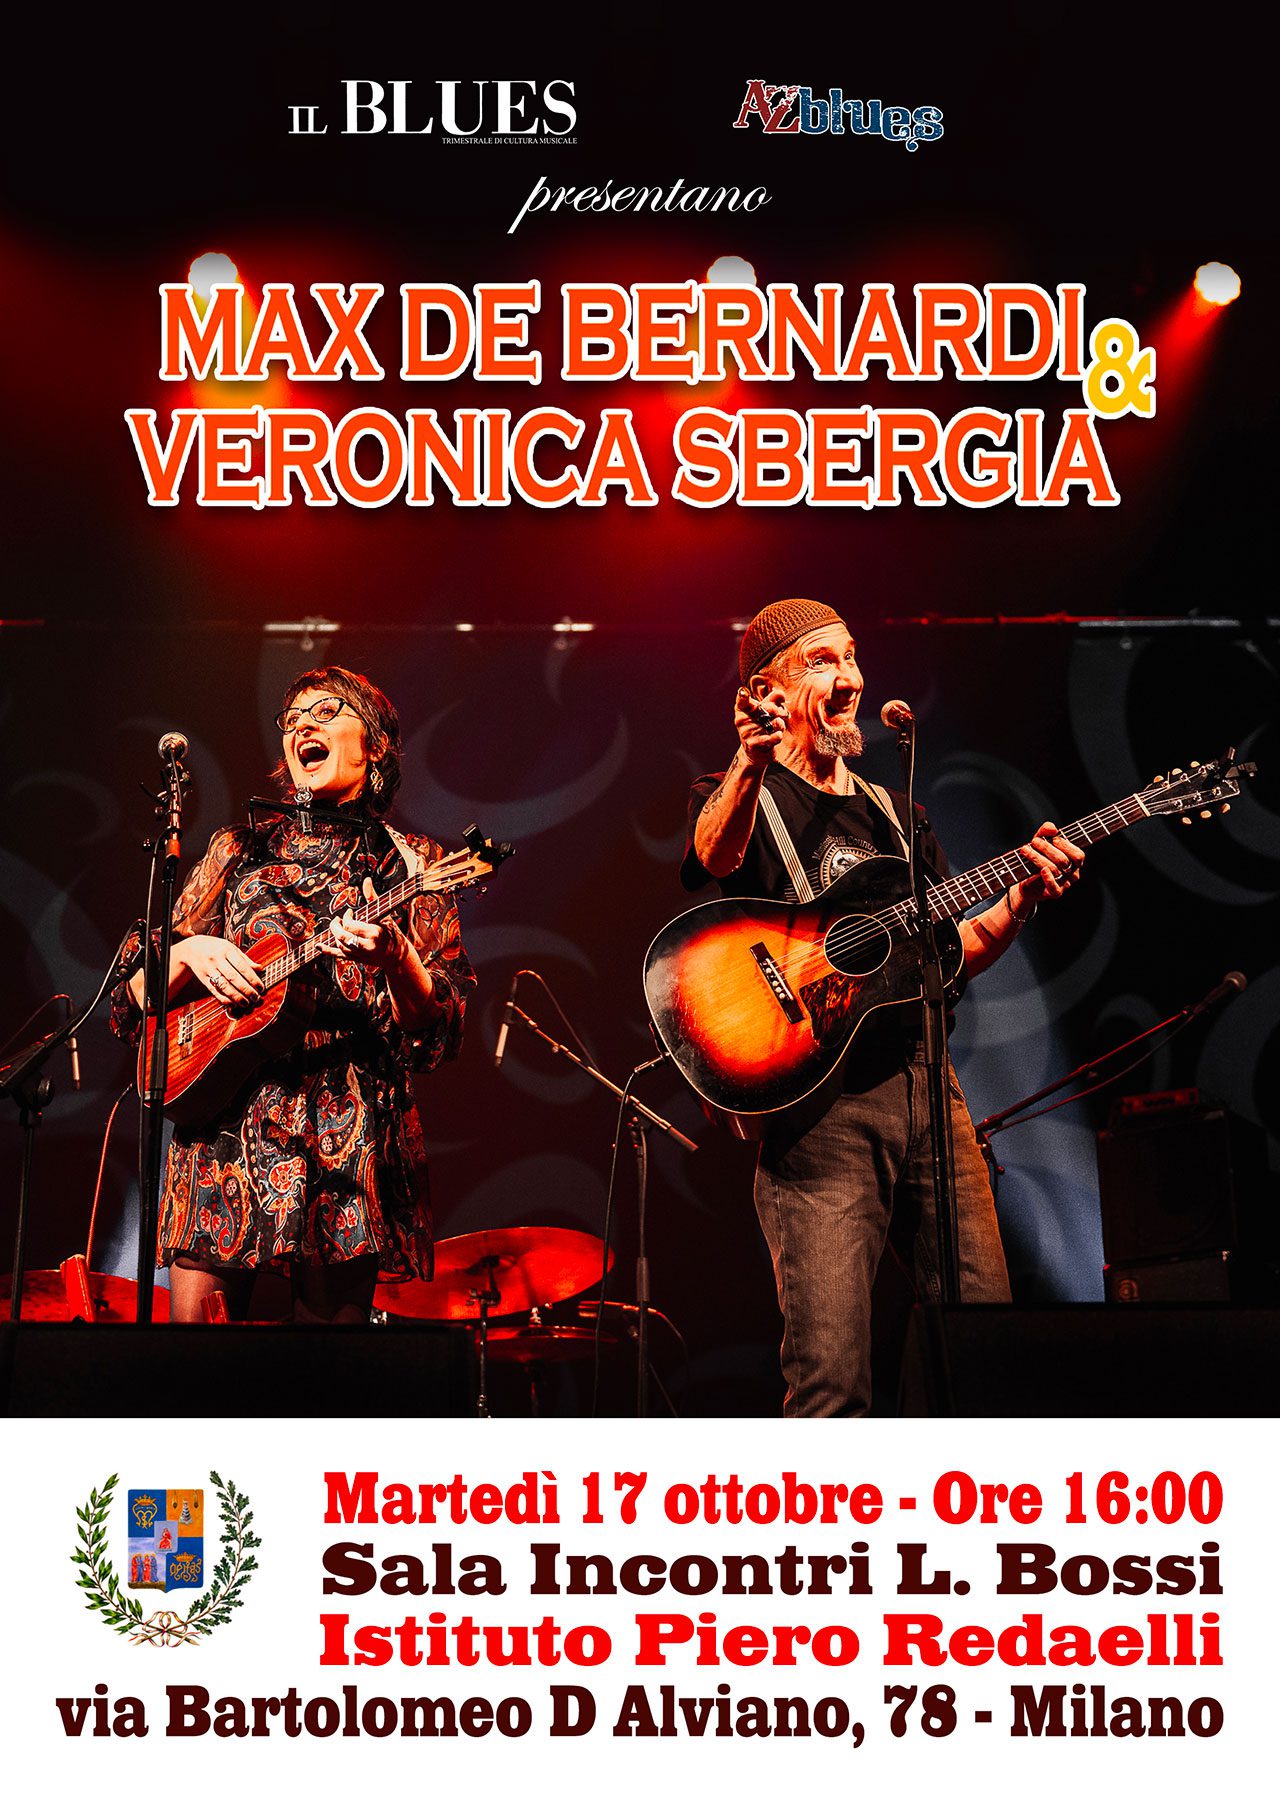 Max De Bernardi & Veronica Sbergia live in concert